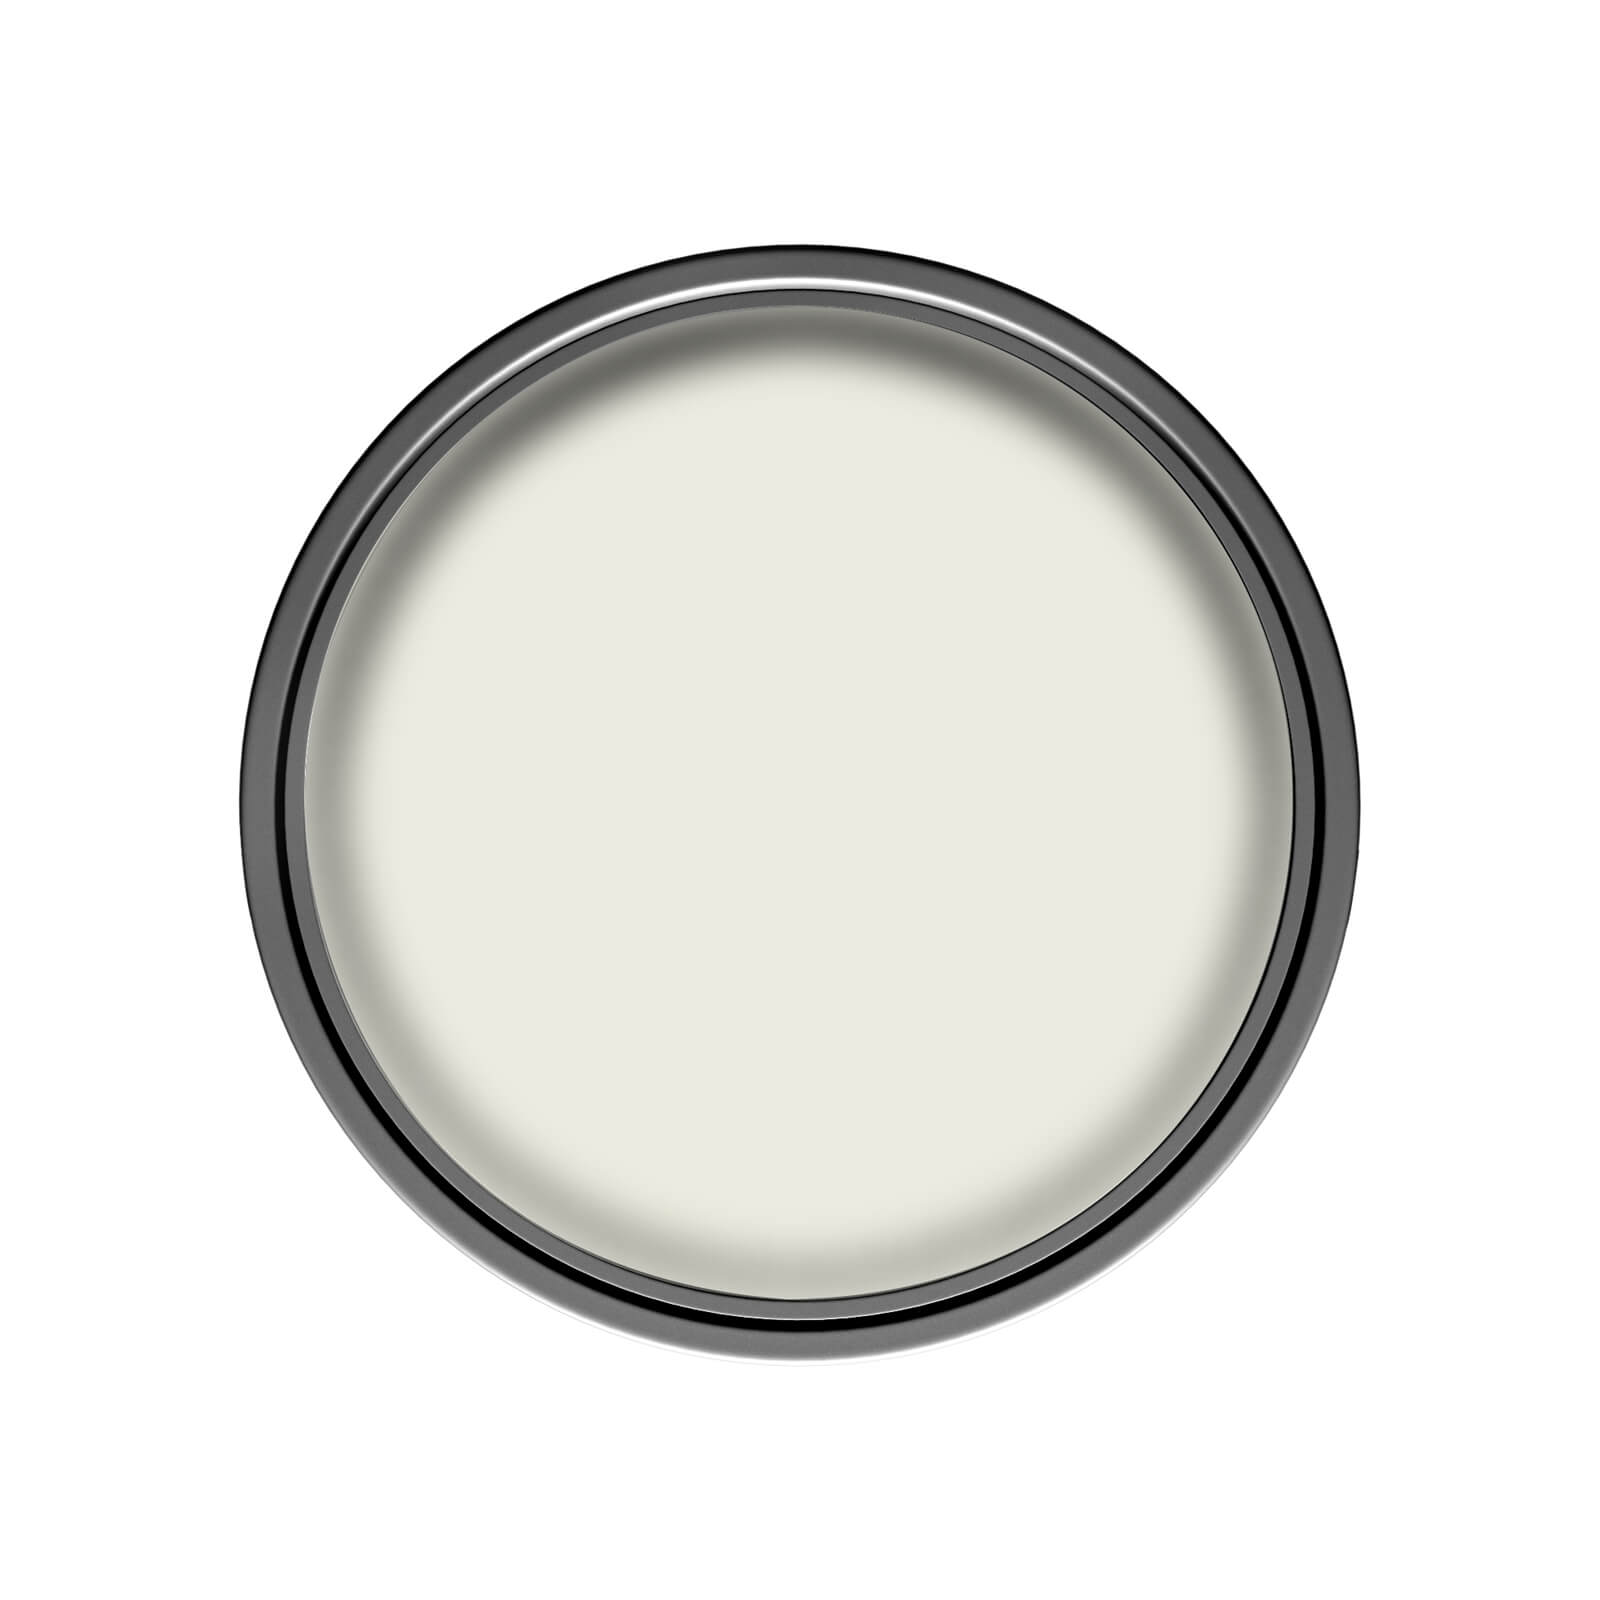 Dulux Matt Emulsion Paint Fine Cream - 2.5L